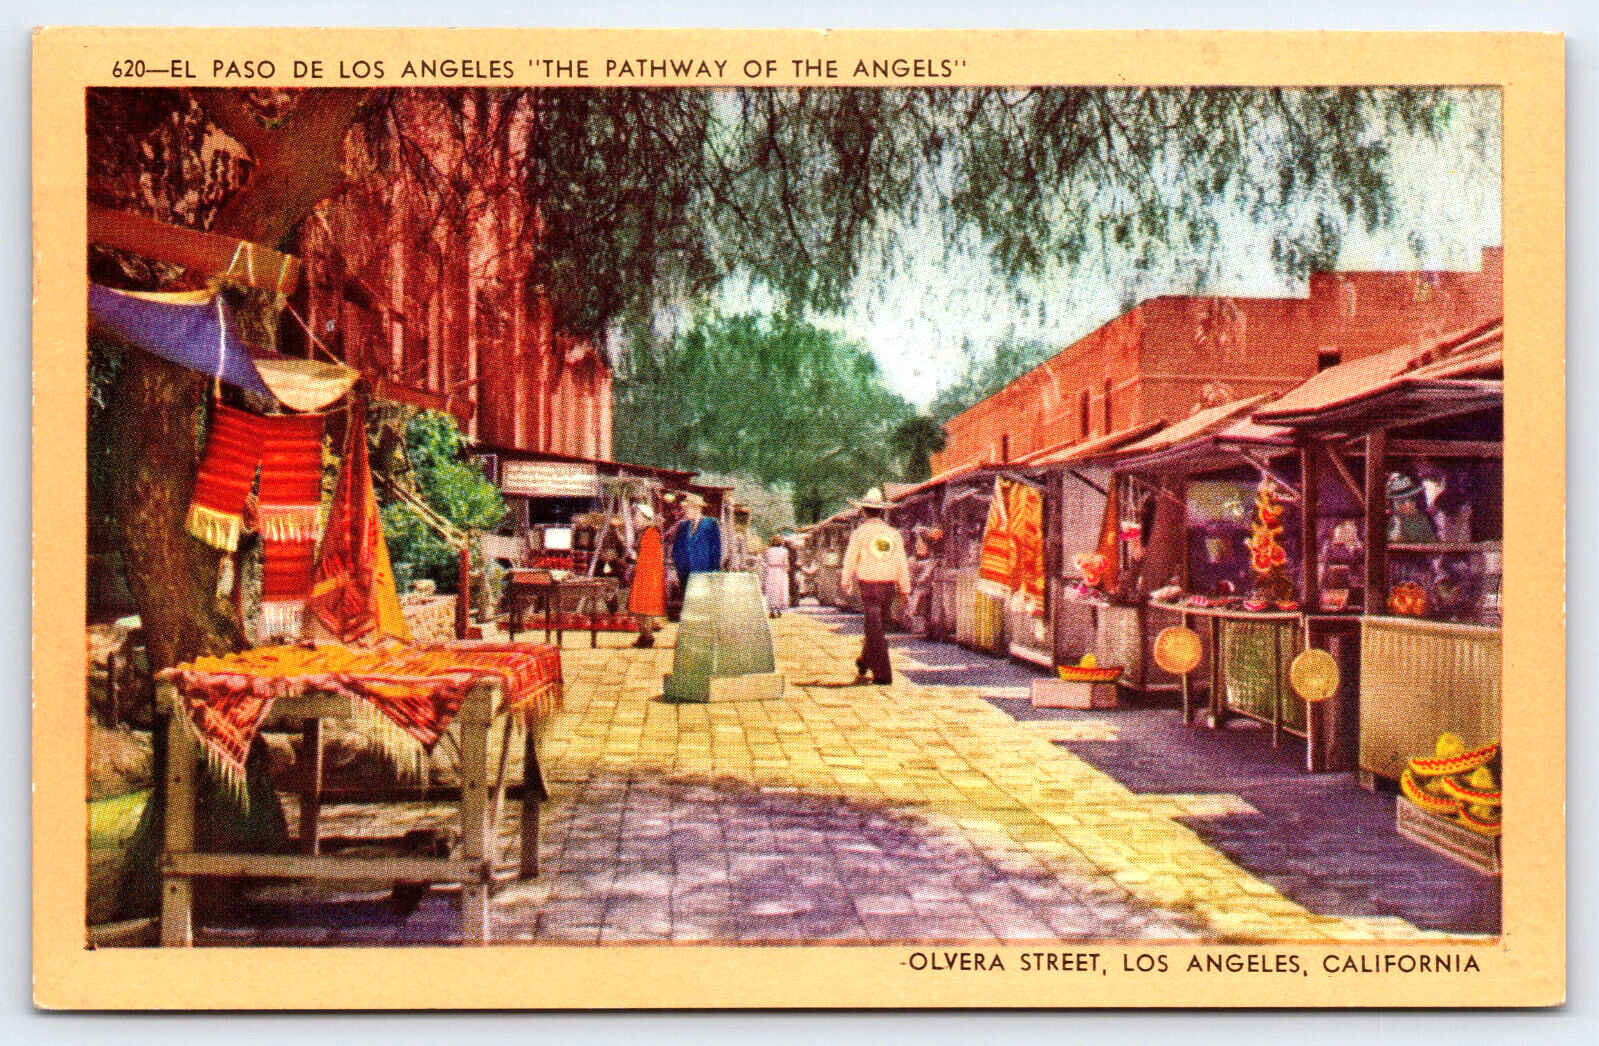 Los Angeles CA-California, Olvera Street, Pathway Of The Angels Vintage Postcard